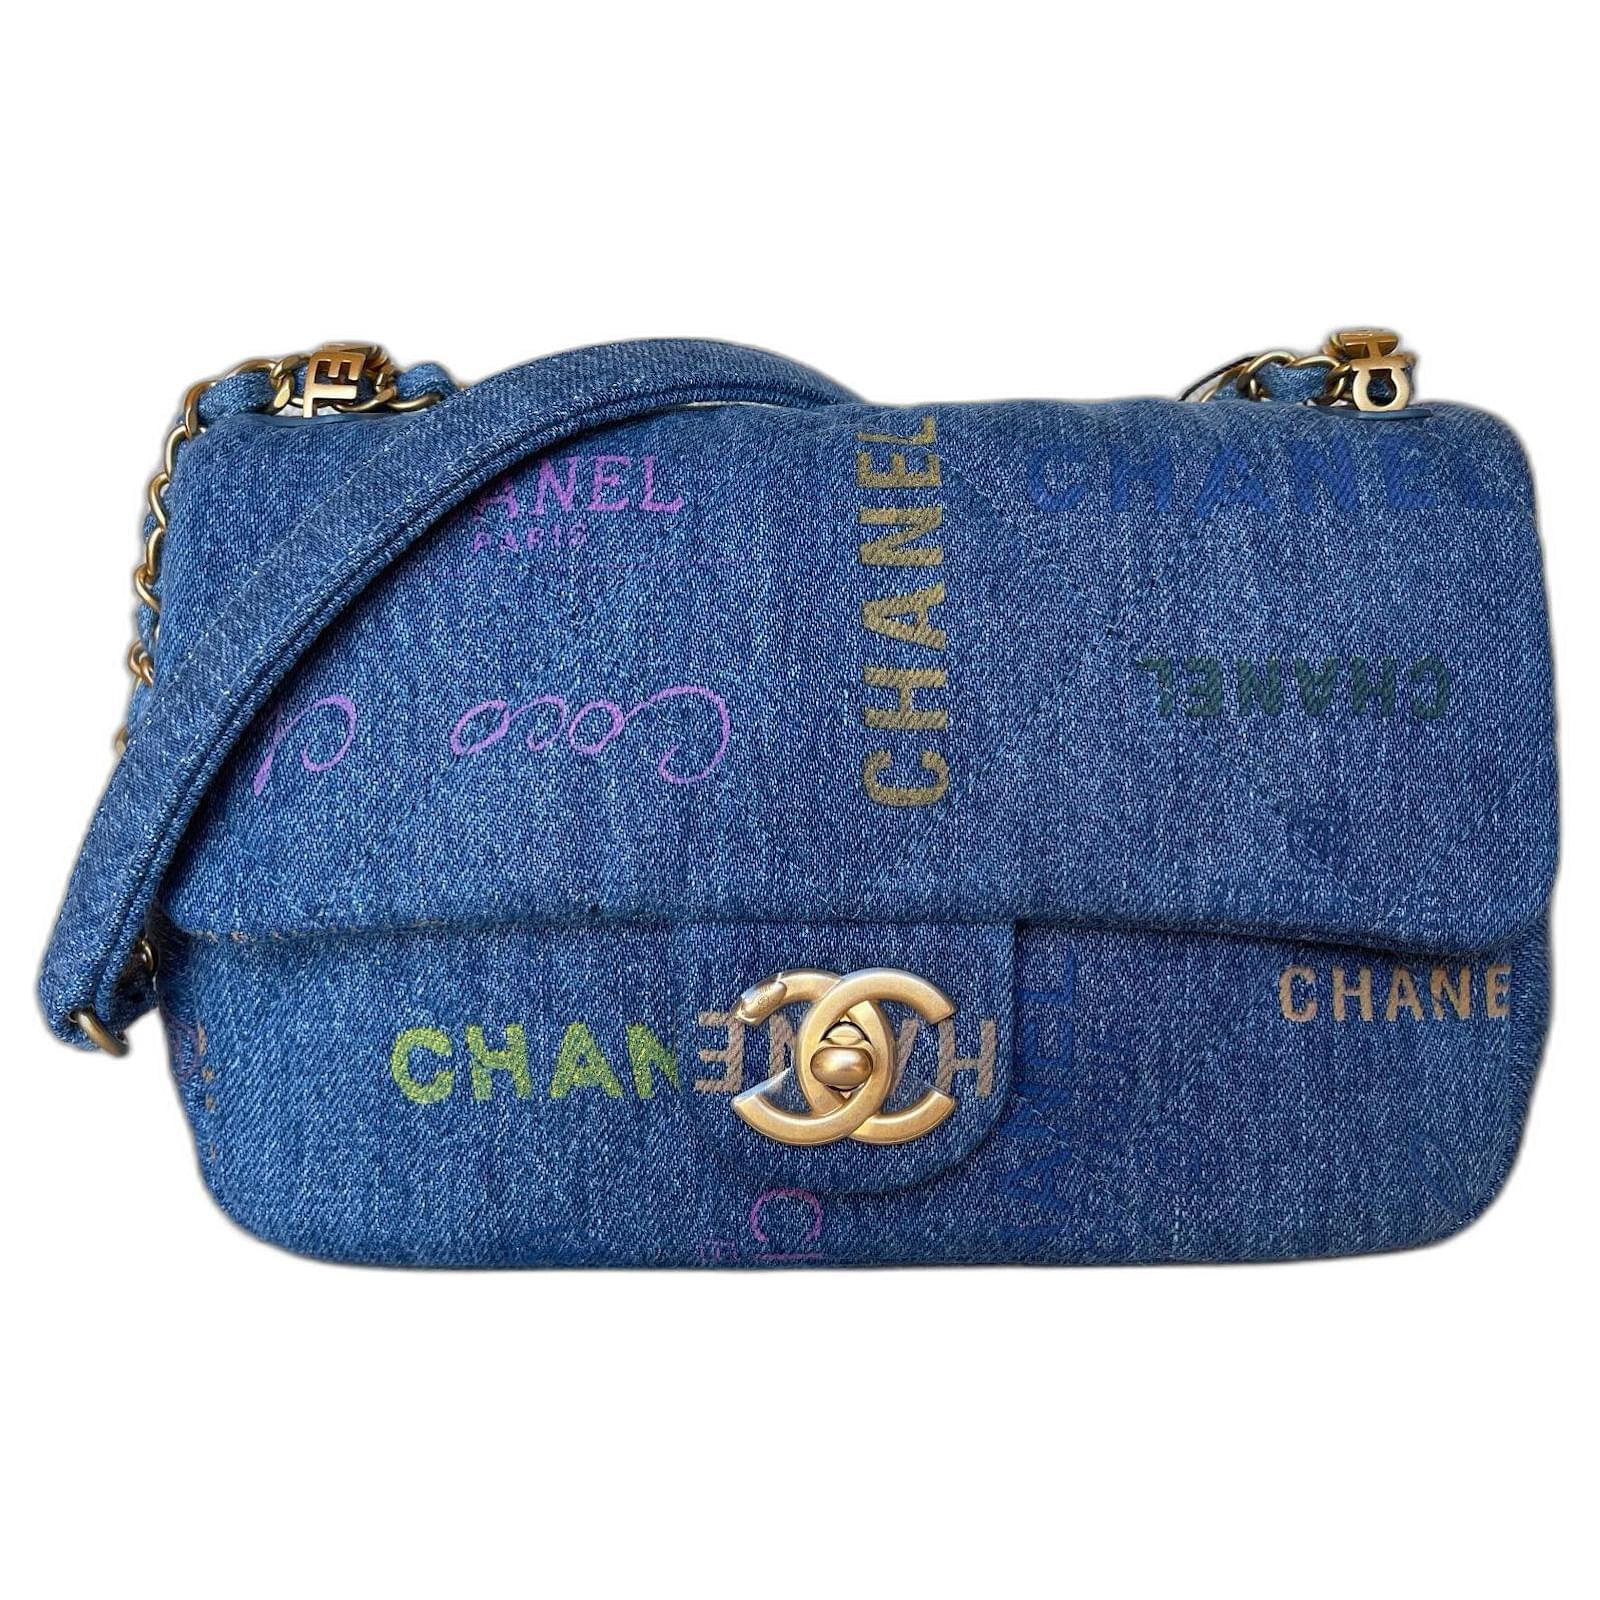 Handbags Chanel Small Blue Denim Flap Bag